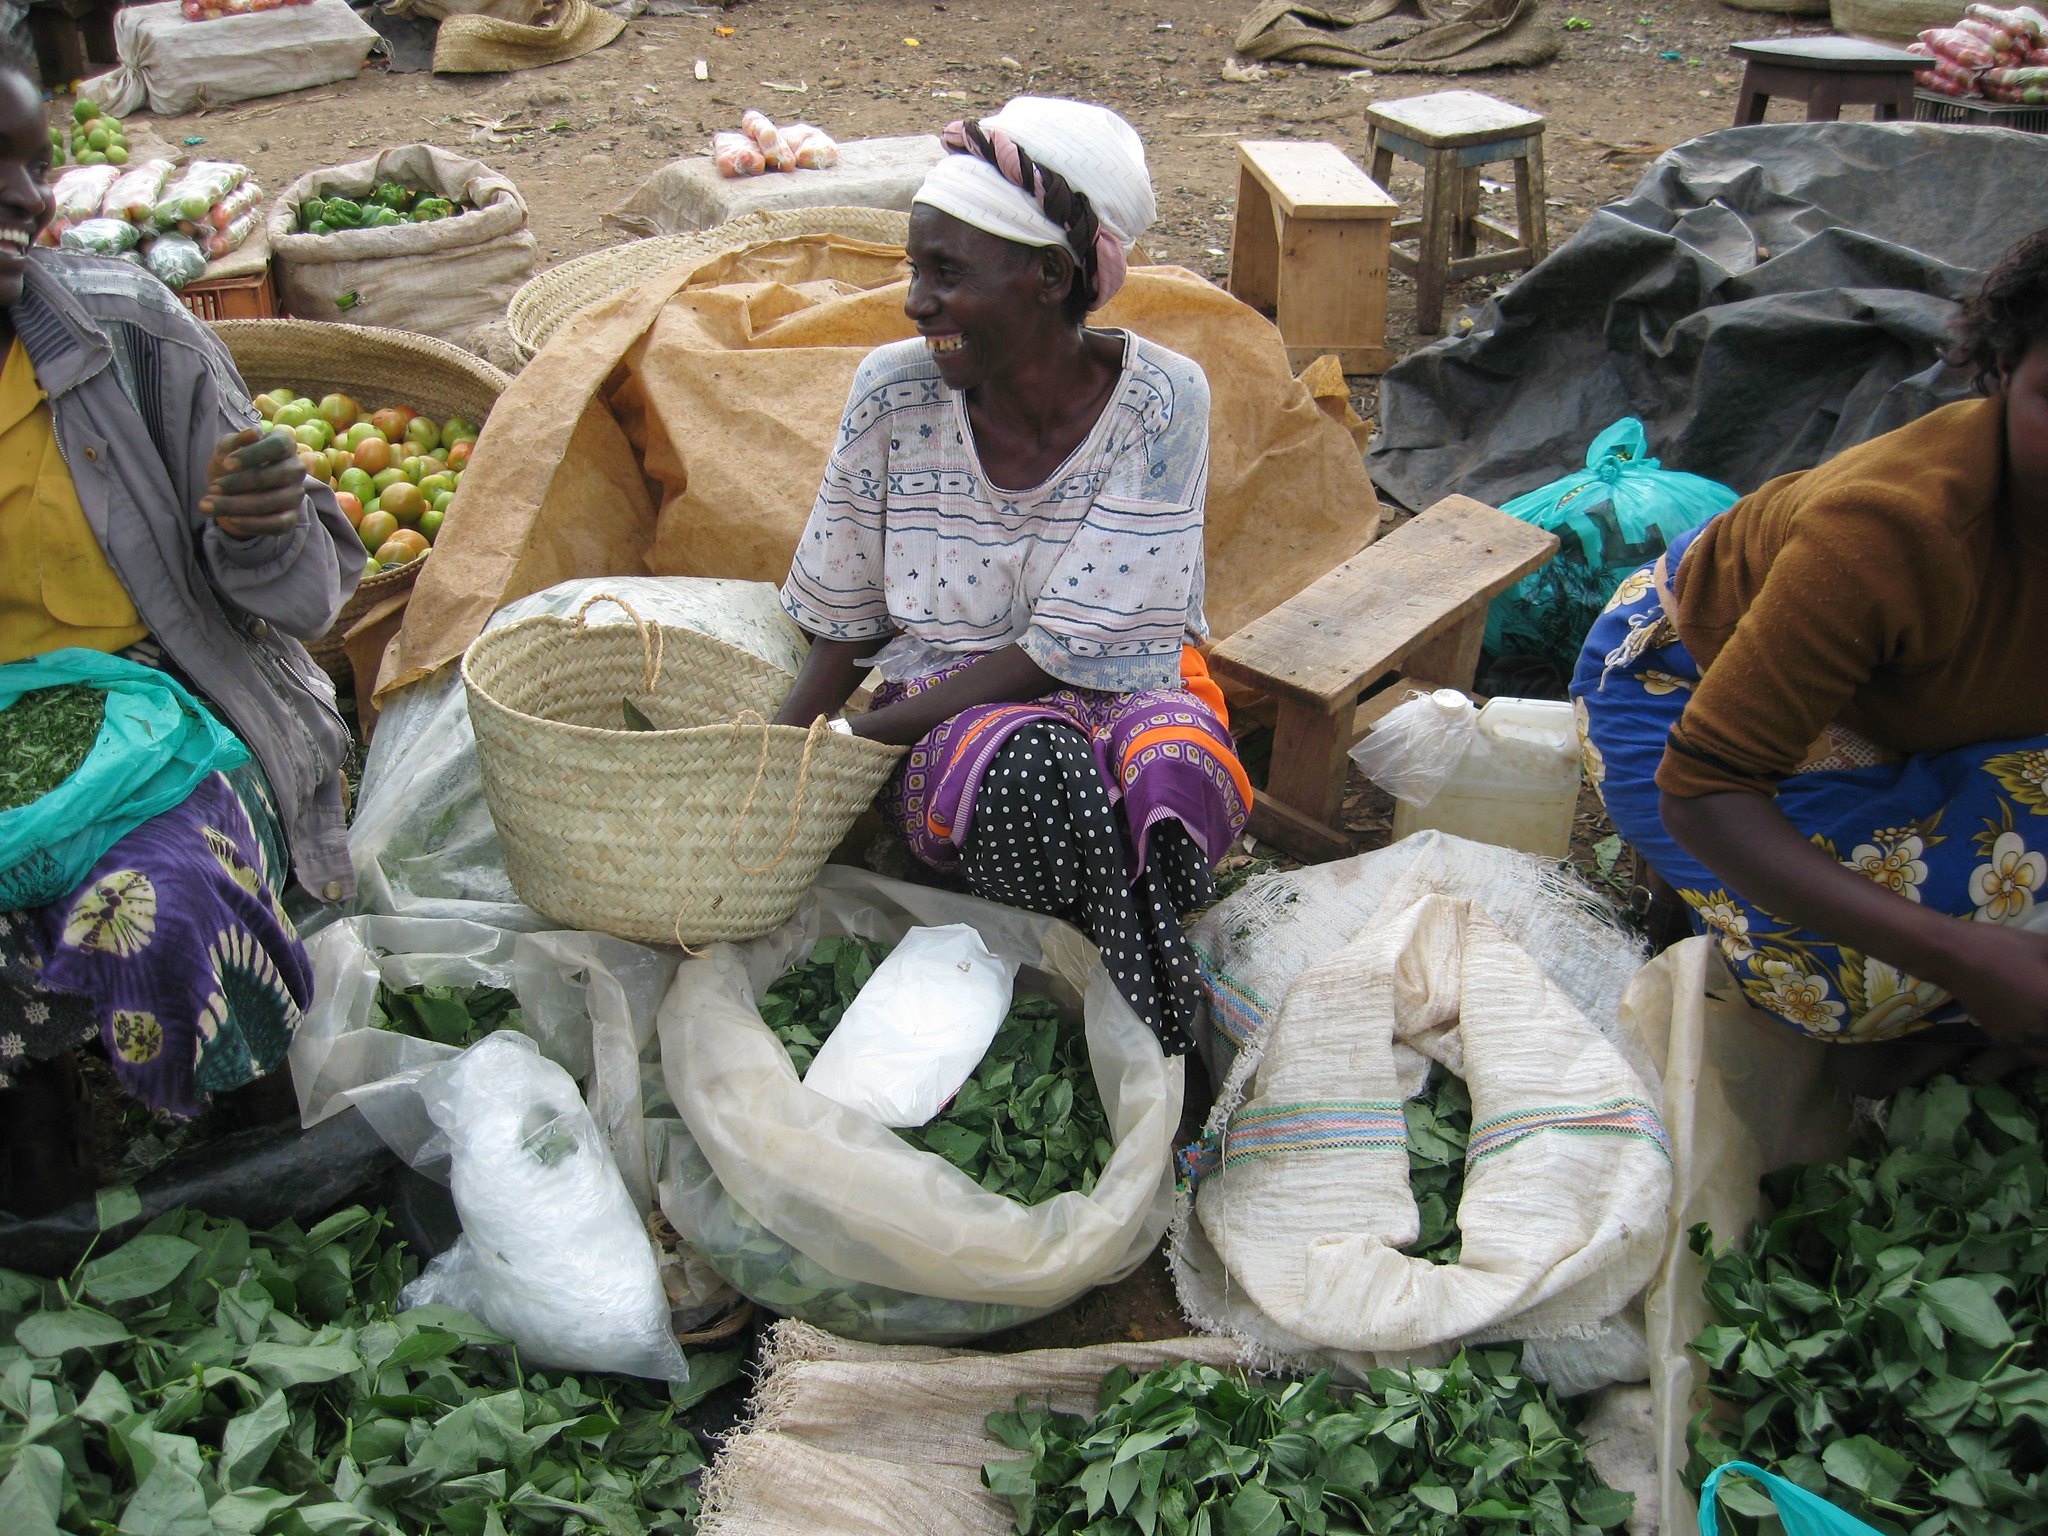 Women in the informal economy in Kenya